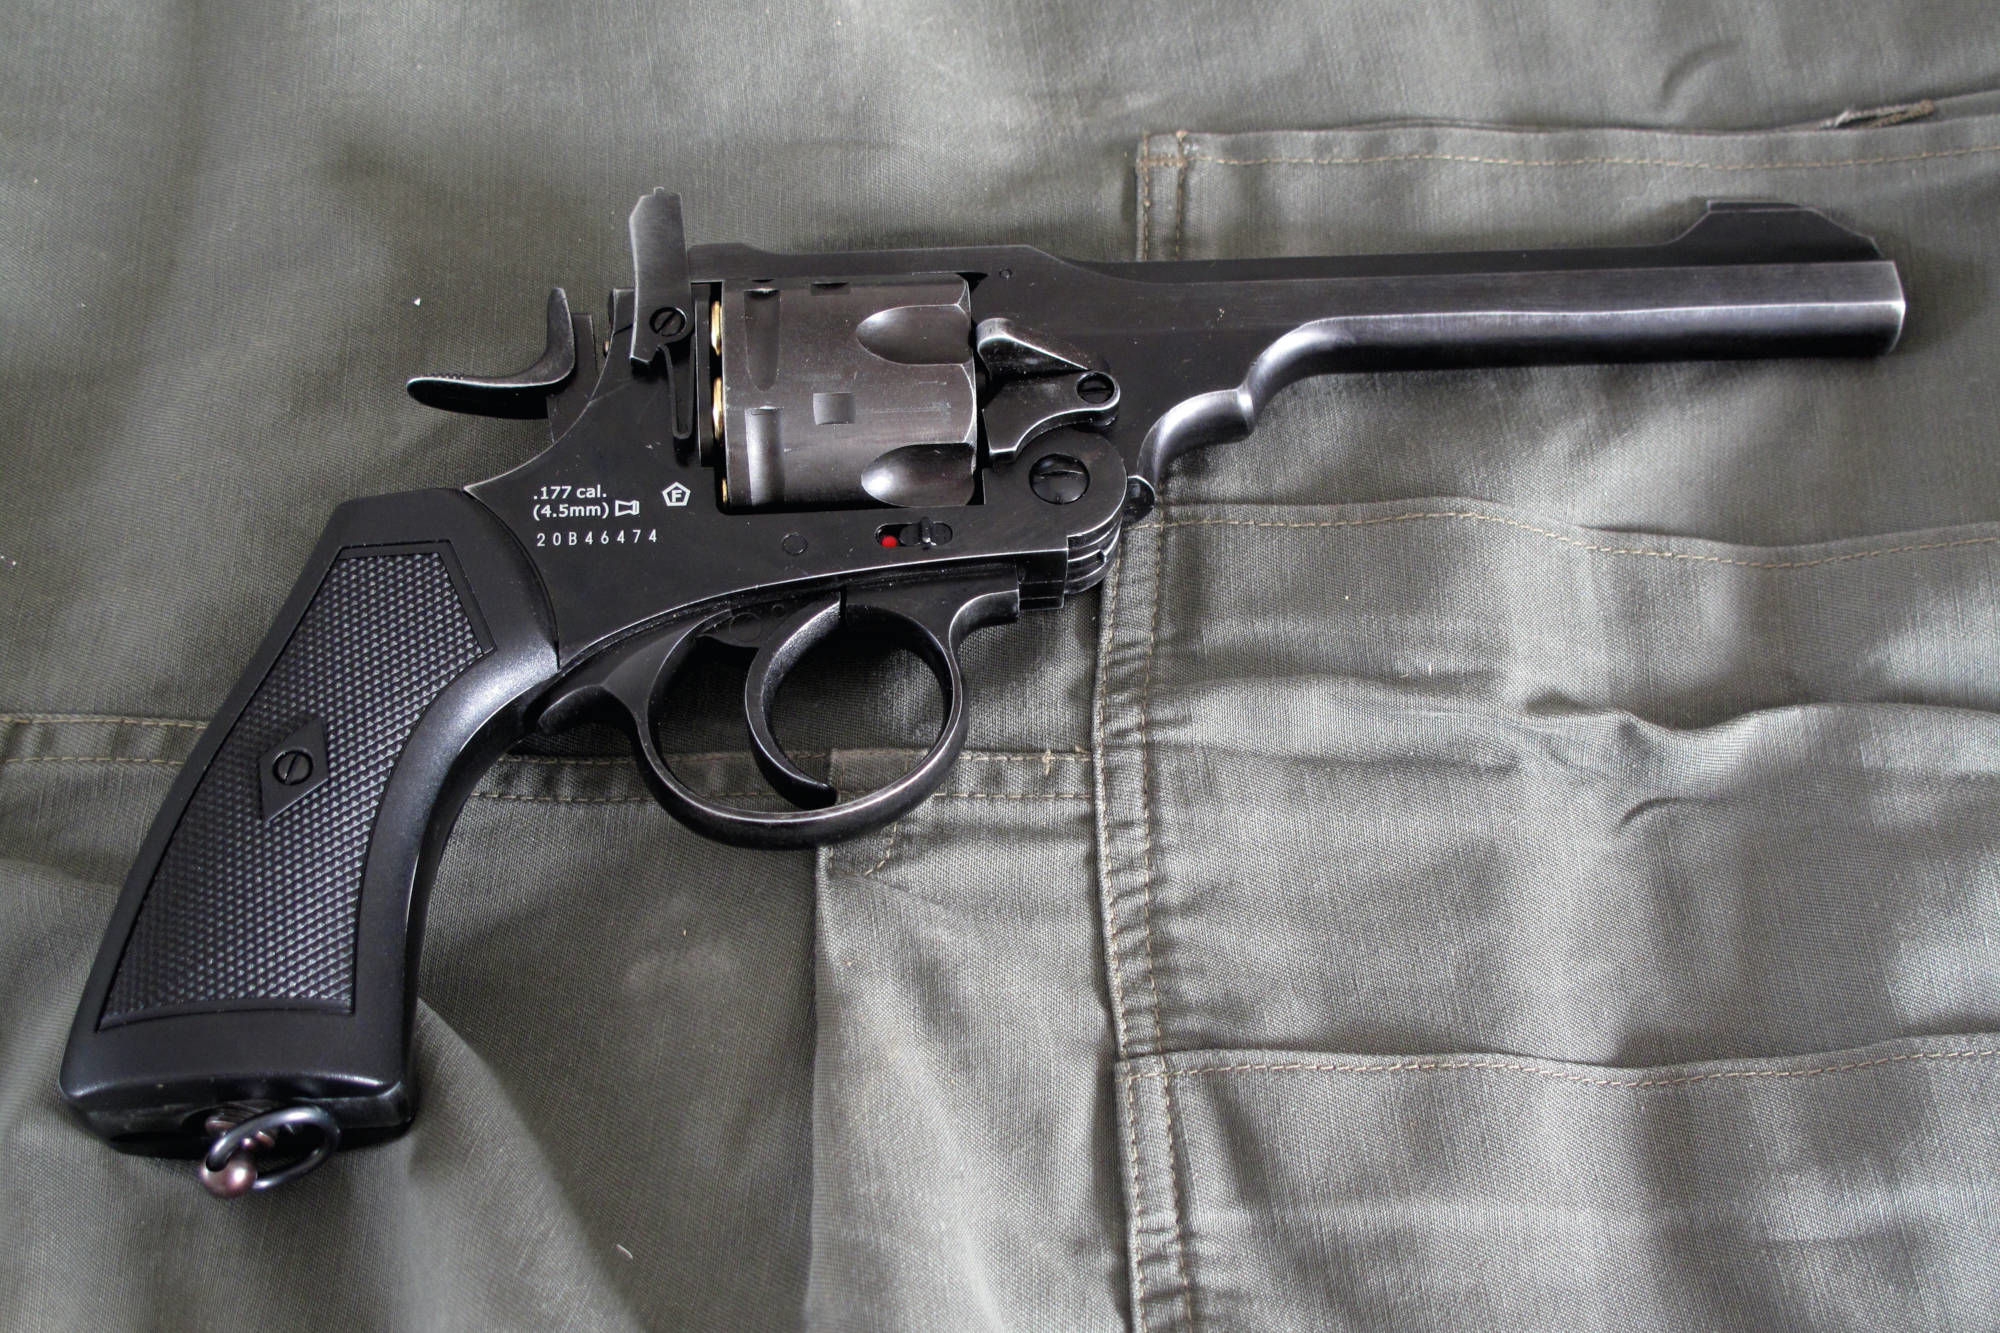 Revolver Webley MKVI Airsoft calibre 6mm 1,4 joules CO2